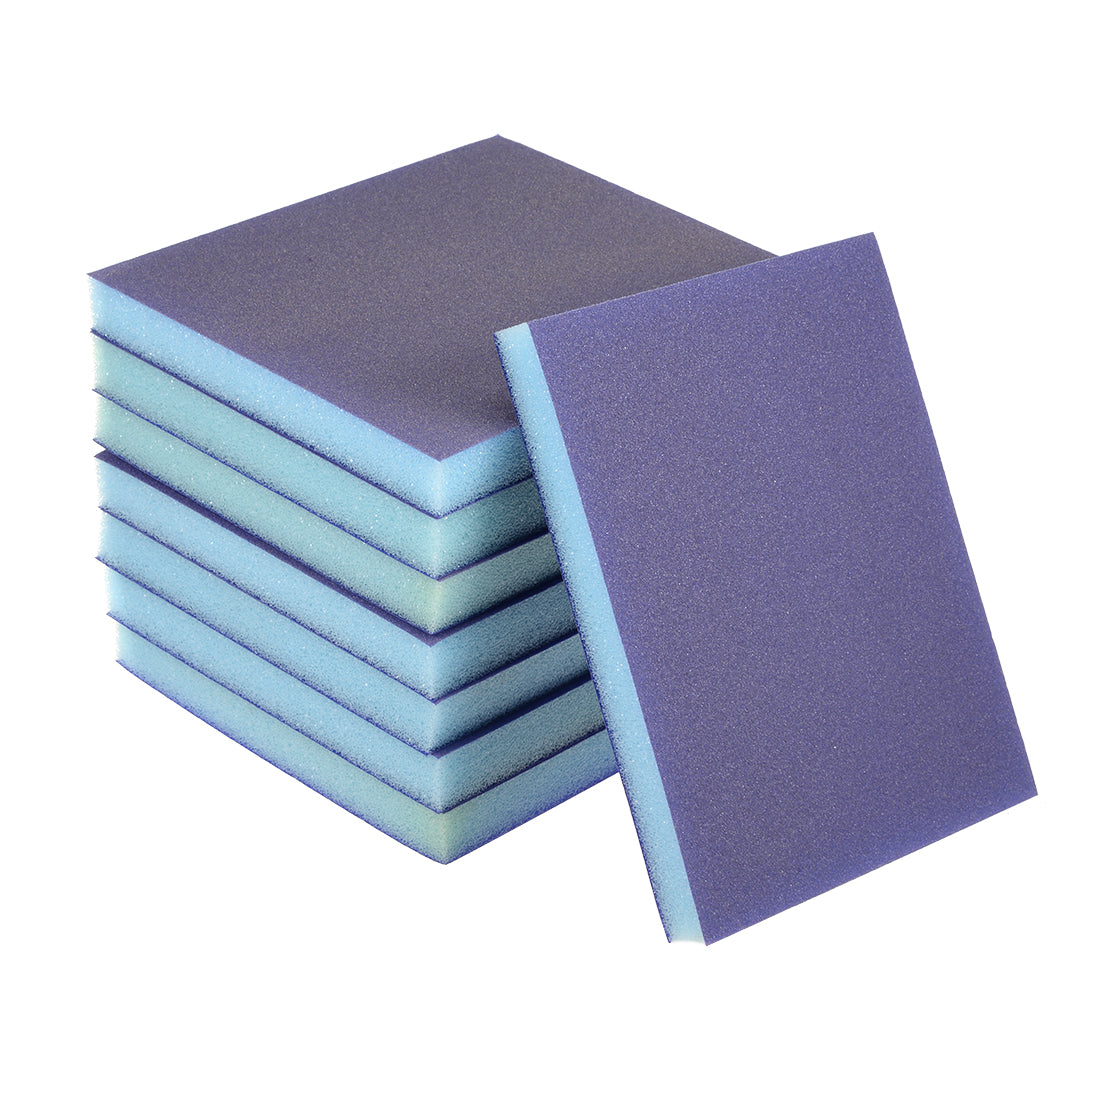 uxcell Uxcell Sanding Sponge, Medium Grit 220 Grit Sanding Block Pad, 4.72" x 3.86" x 0.47" Size Blue 8pcs